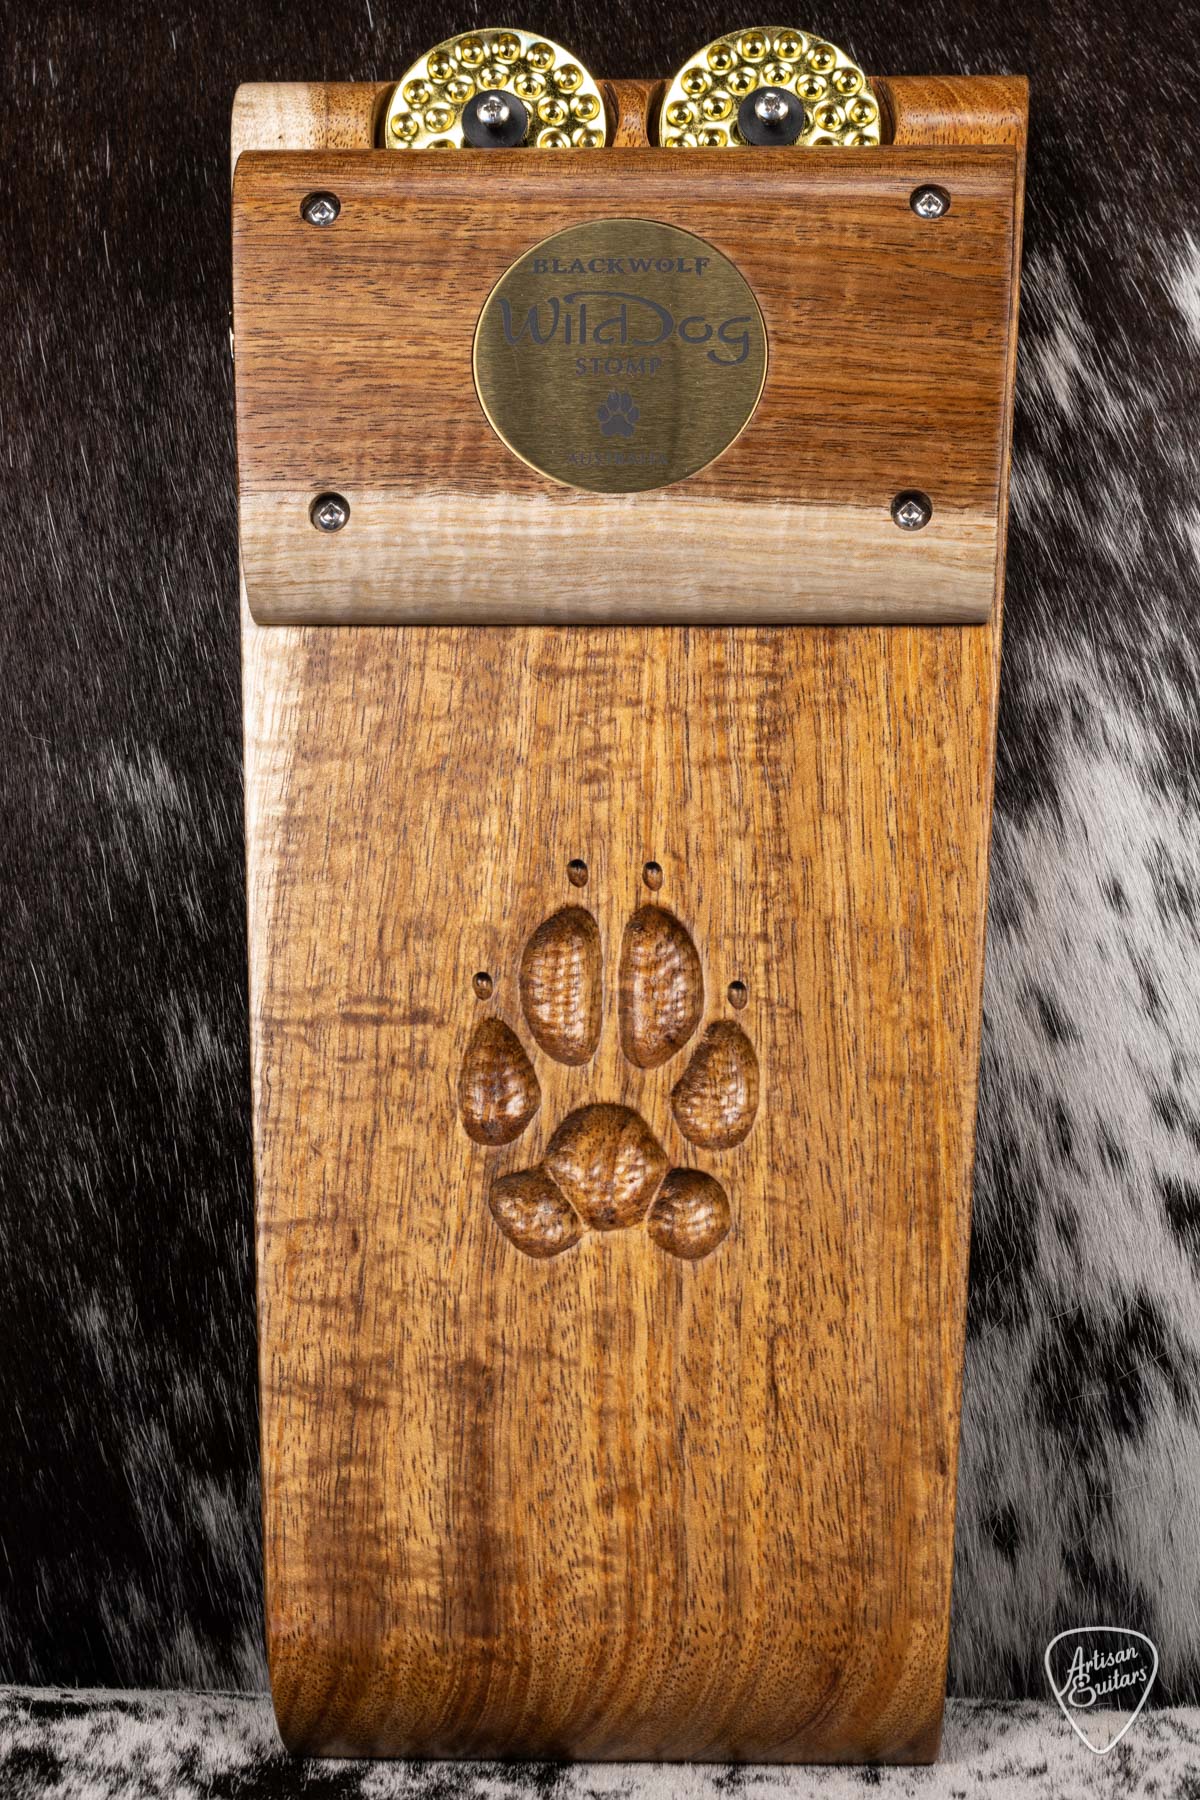 Wild Dog Custom Shop BlackWolf Stomp Box - 16388